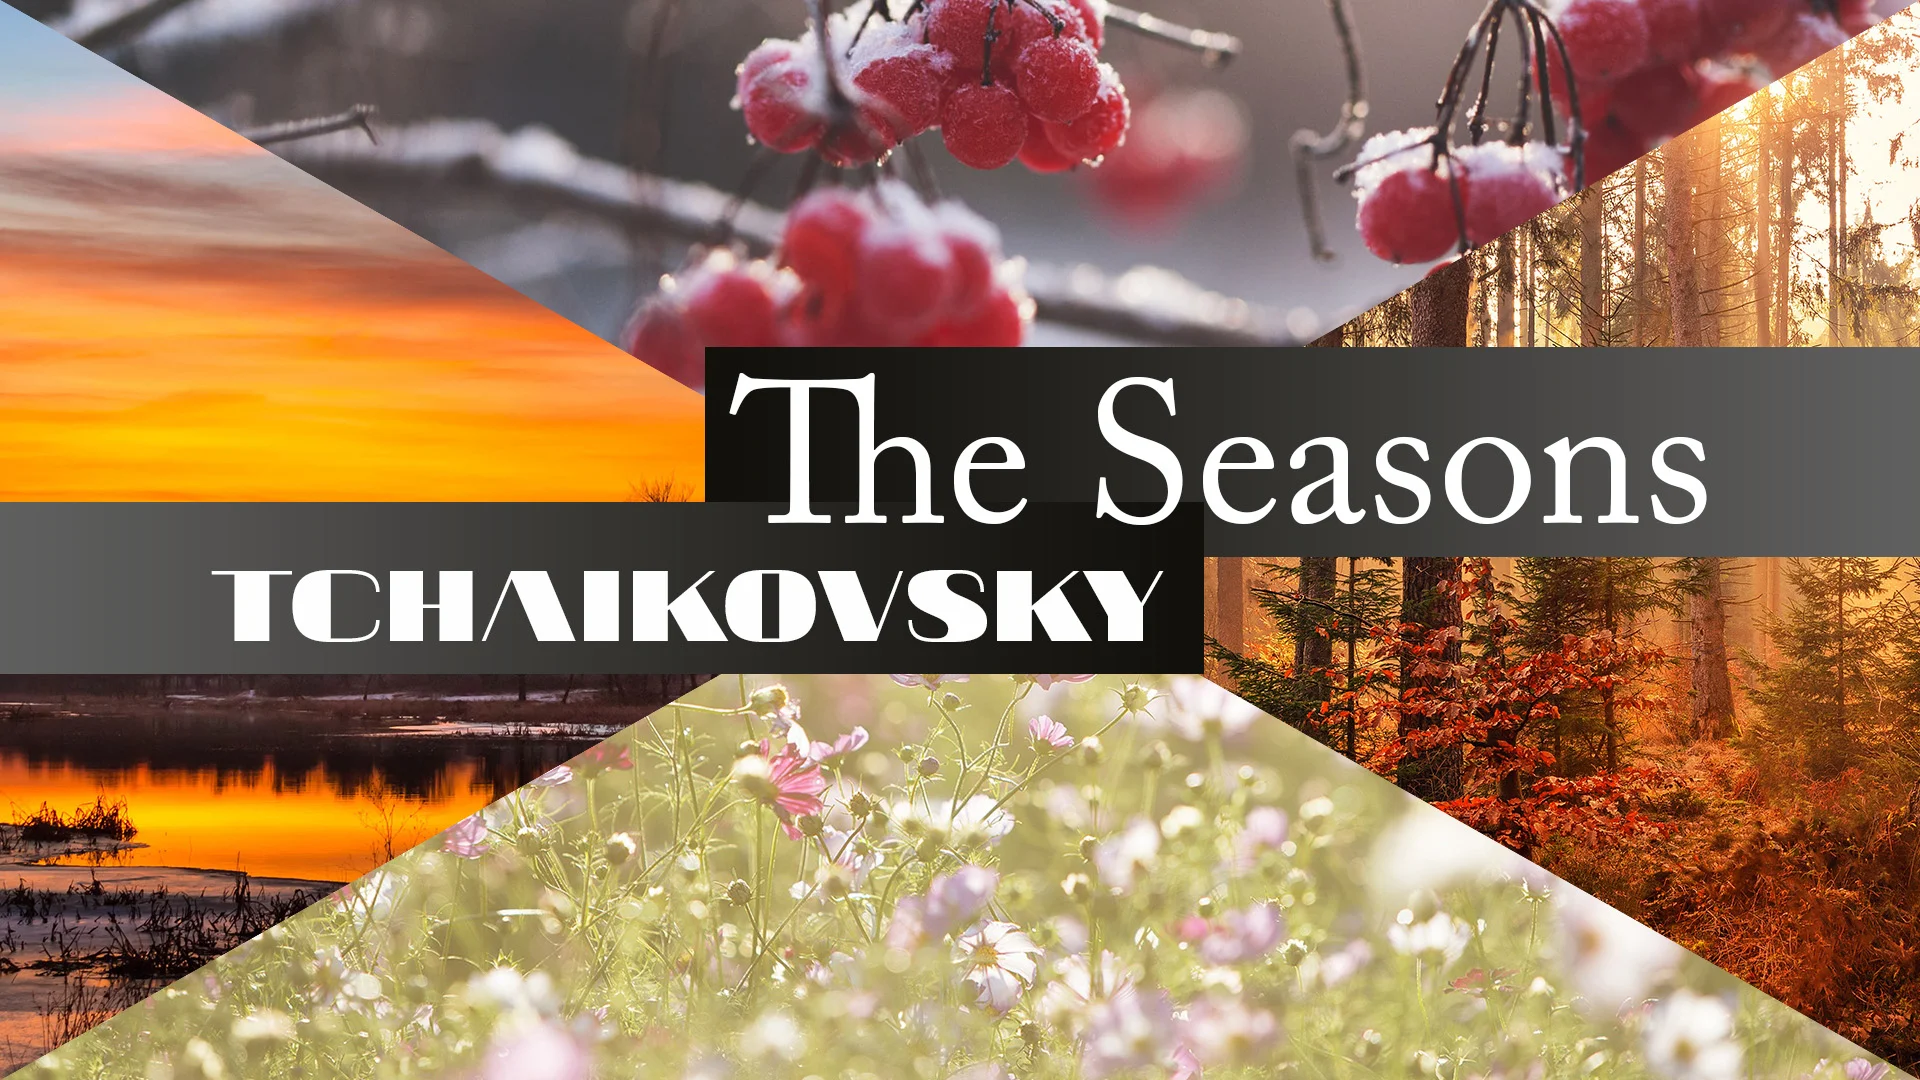 Seasons youtube. Tchaikovsky - the Seasons. Seasons обложки.